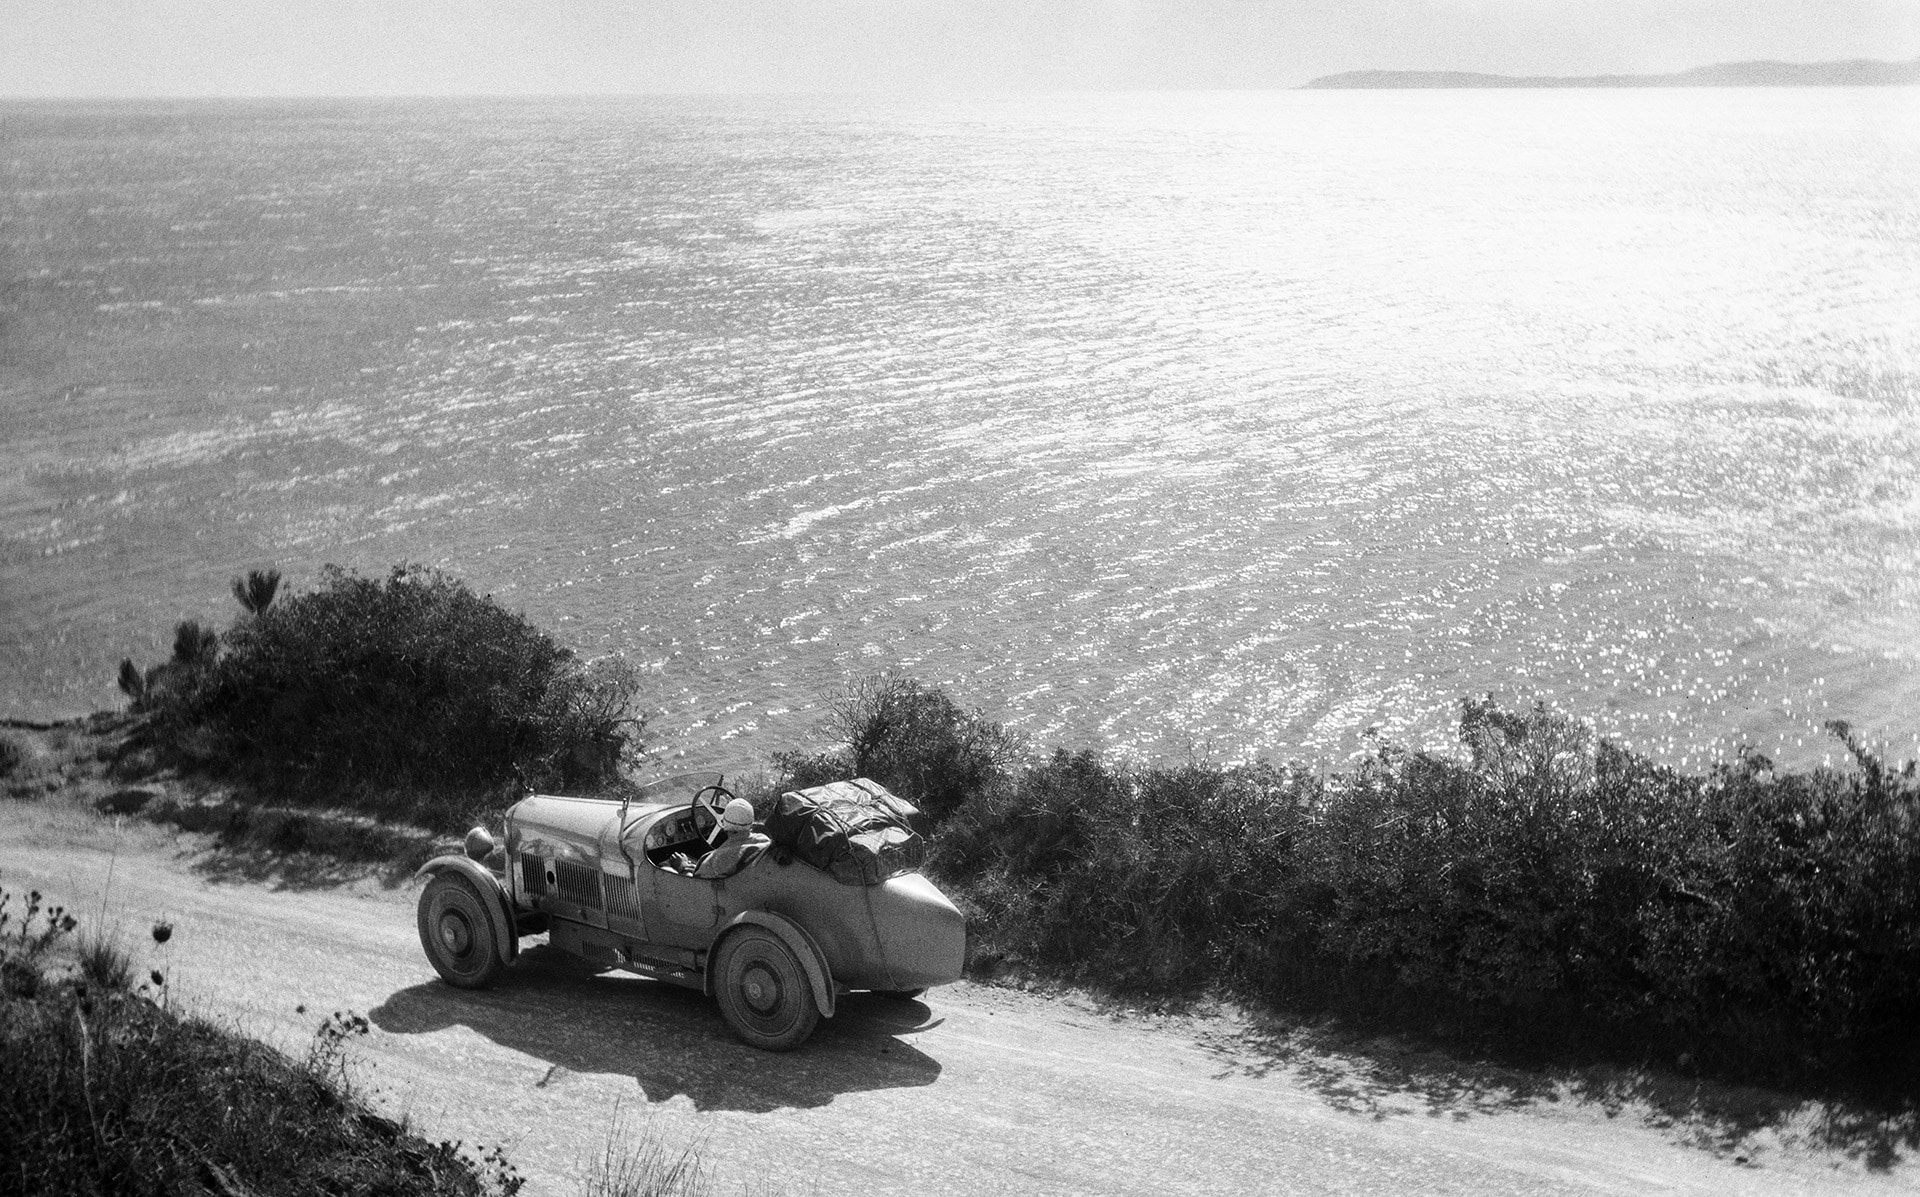 Mediterraneo 1927. Photograph by Jacques Henri Lartigue © Ministère de la Culture (France), MAP-AAJHL